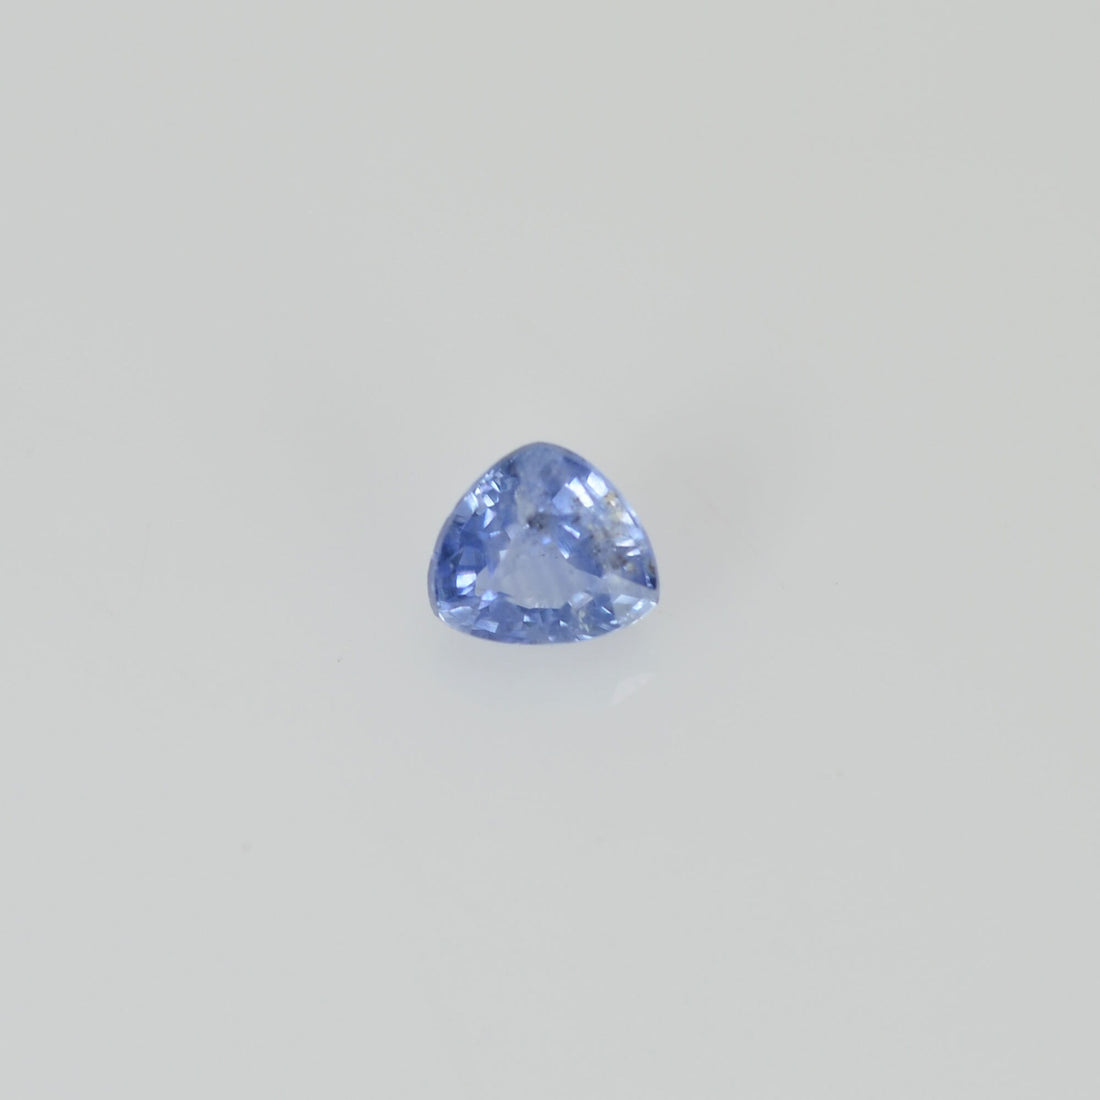 0.16 Cts Natural Blue Sapphire Loose Gemstone Trillion Cut